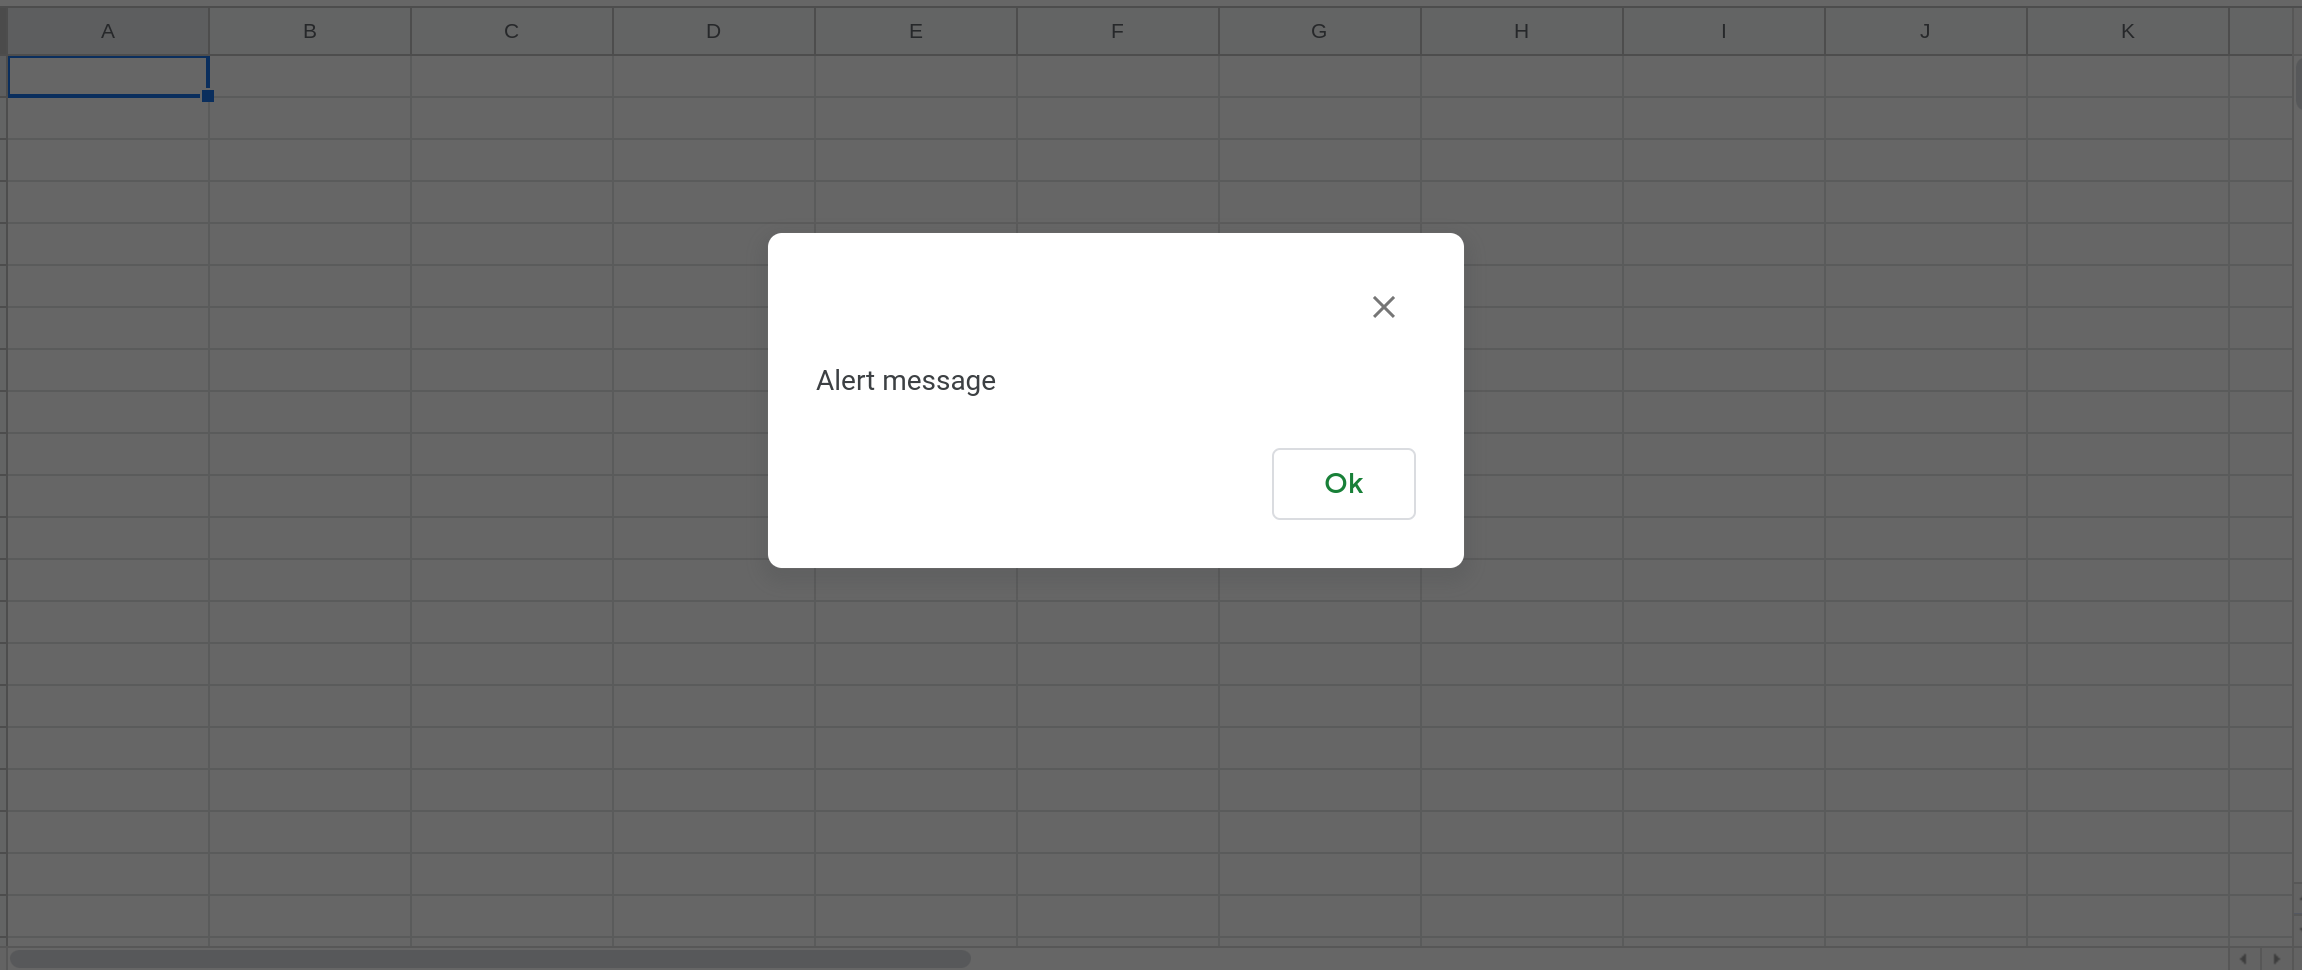 Screenshot of Google Sheets with an alert message displayed. 